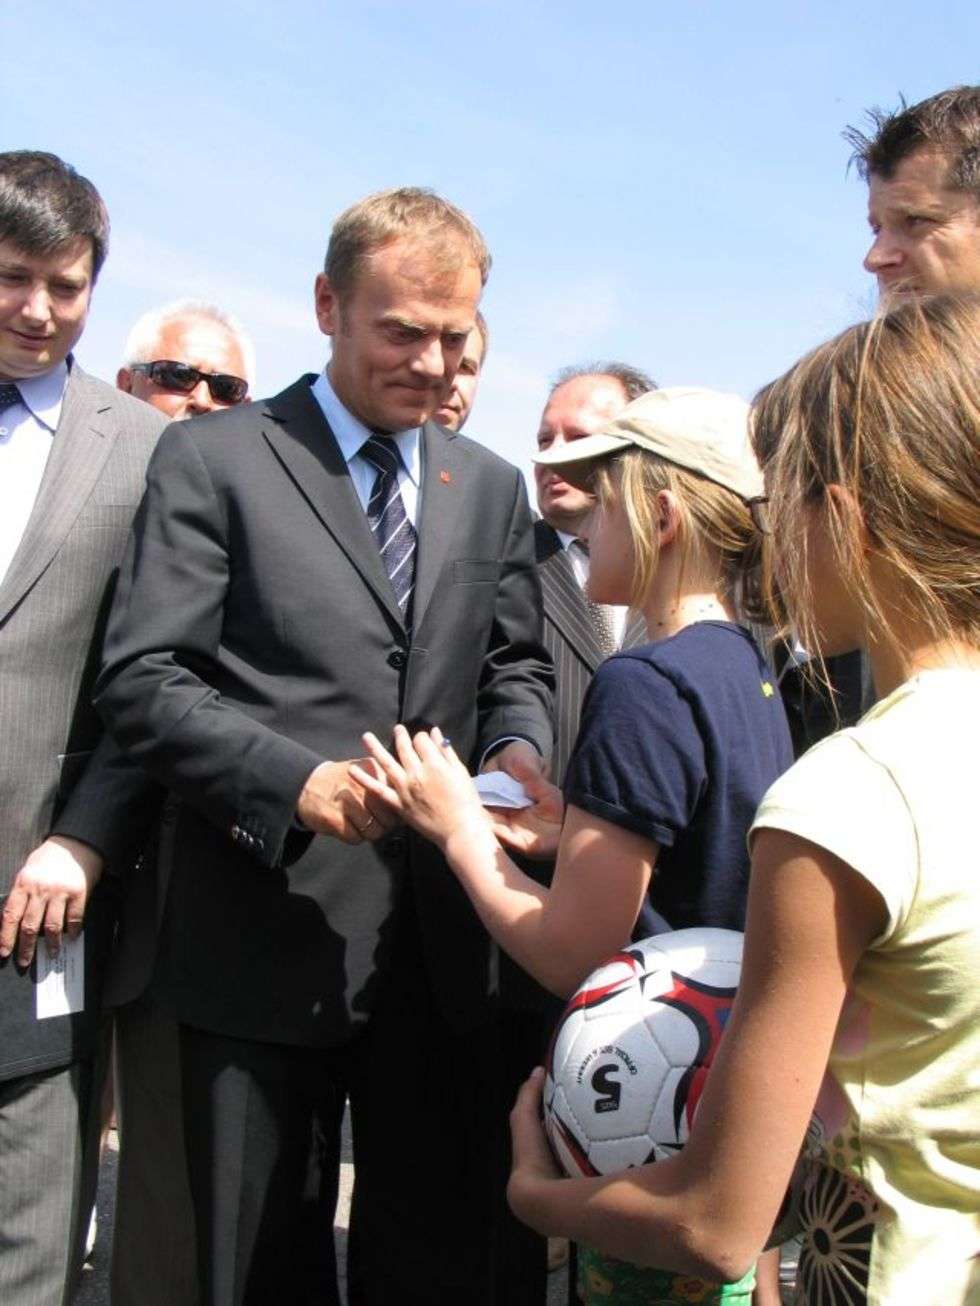  Premier Donald Tusk rozdaje autografy